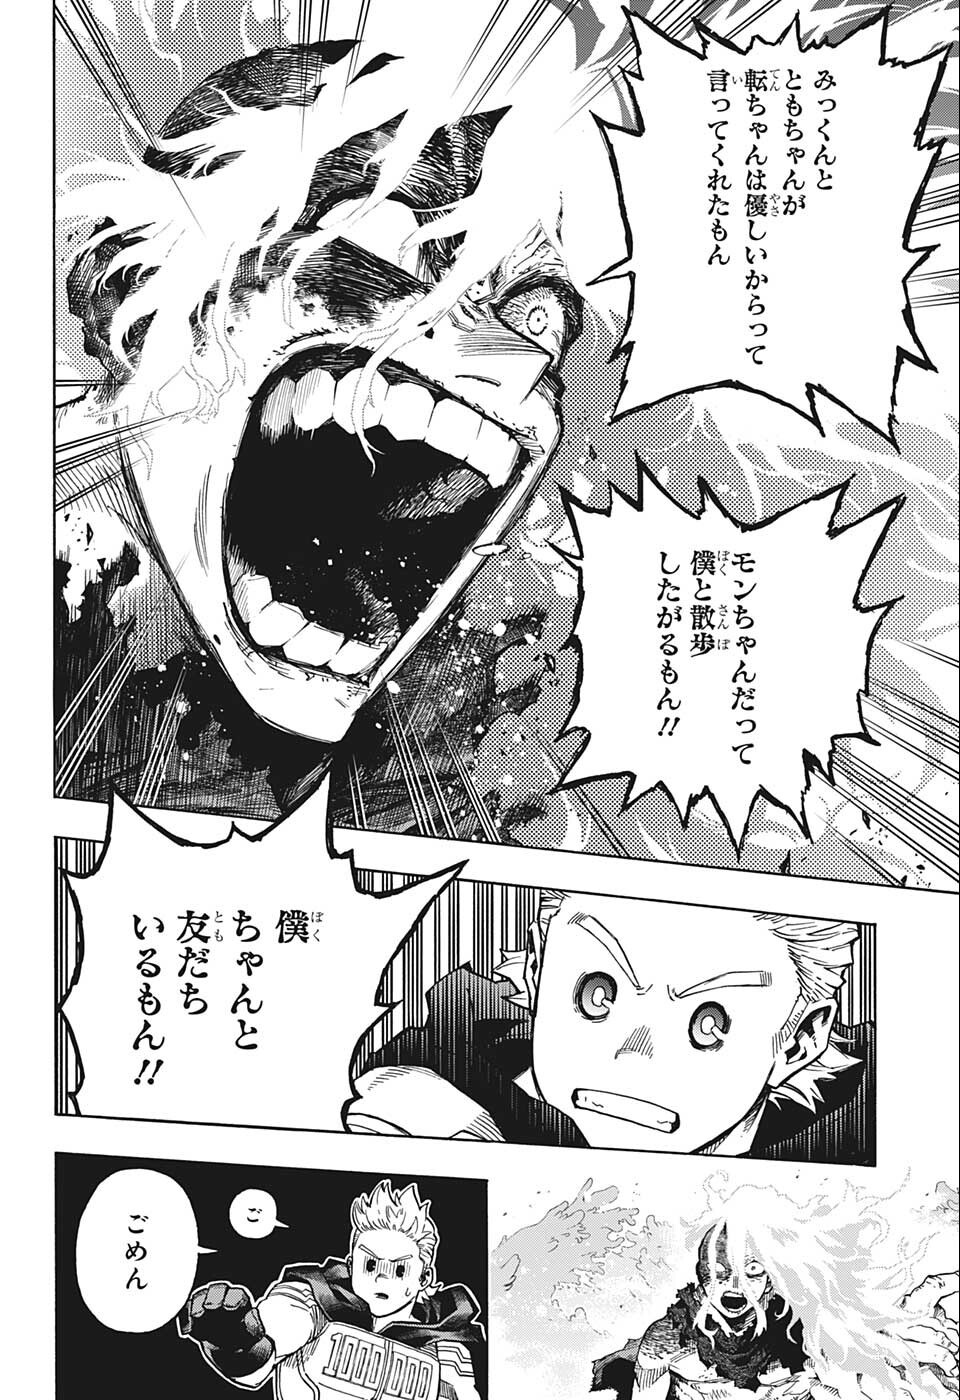 Boku no Hero Academia - Chapter 361 - Page 2